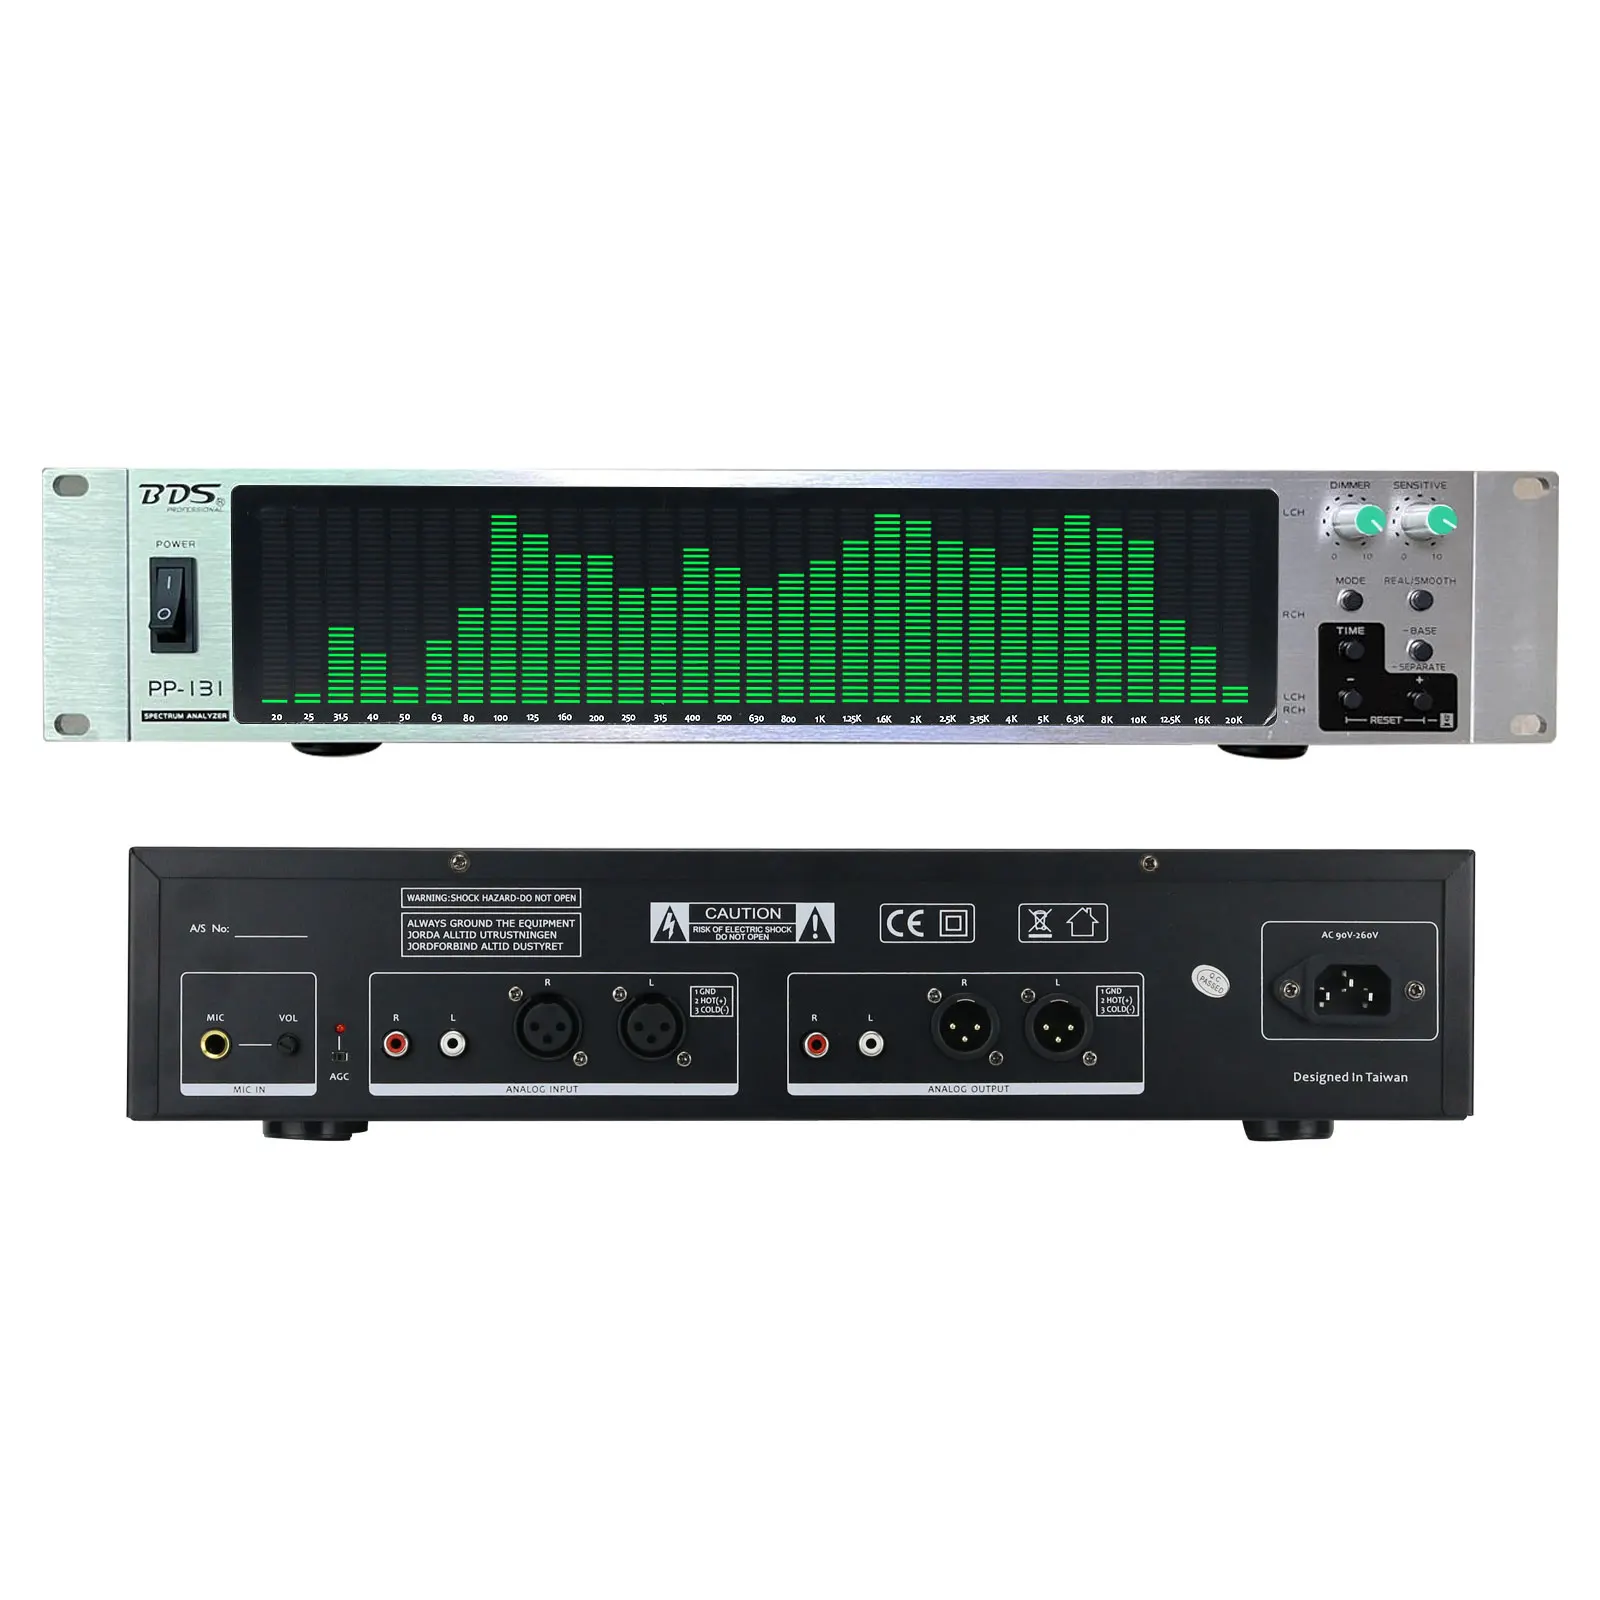 Wholesale PP-131 Green/White/Blue LED Audio Spectrum Analyzer Spectrum Display VU Meter Silver Panel From m.alibaba.com